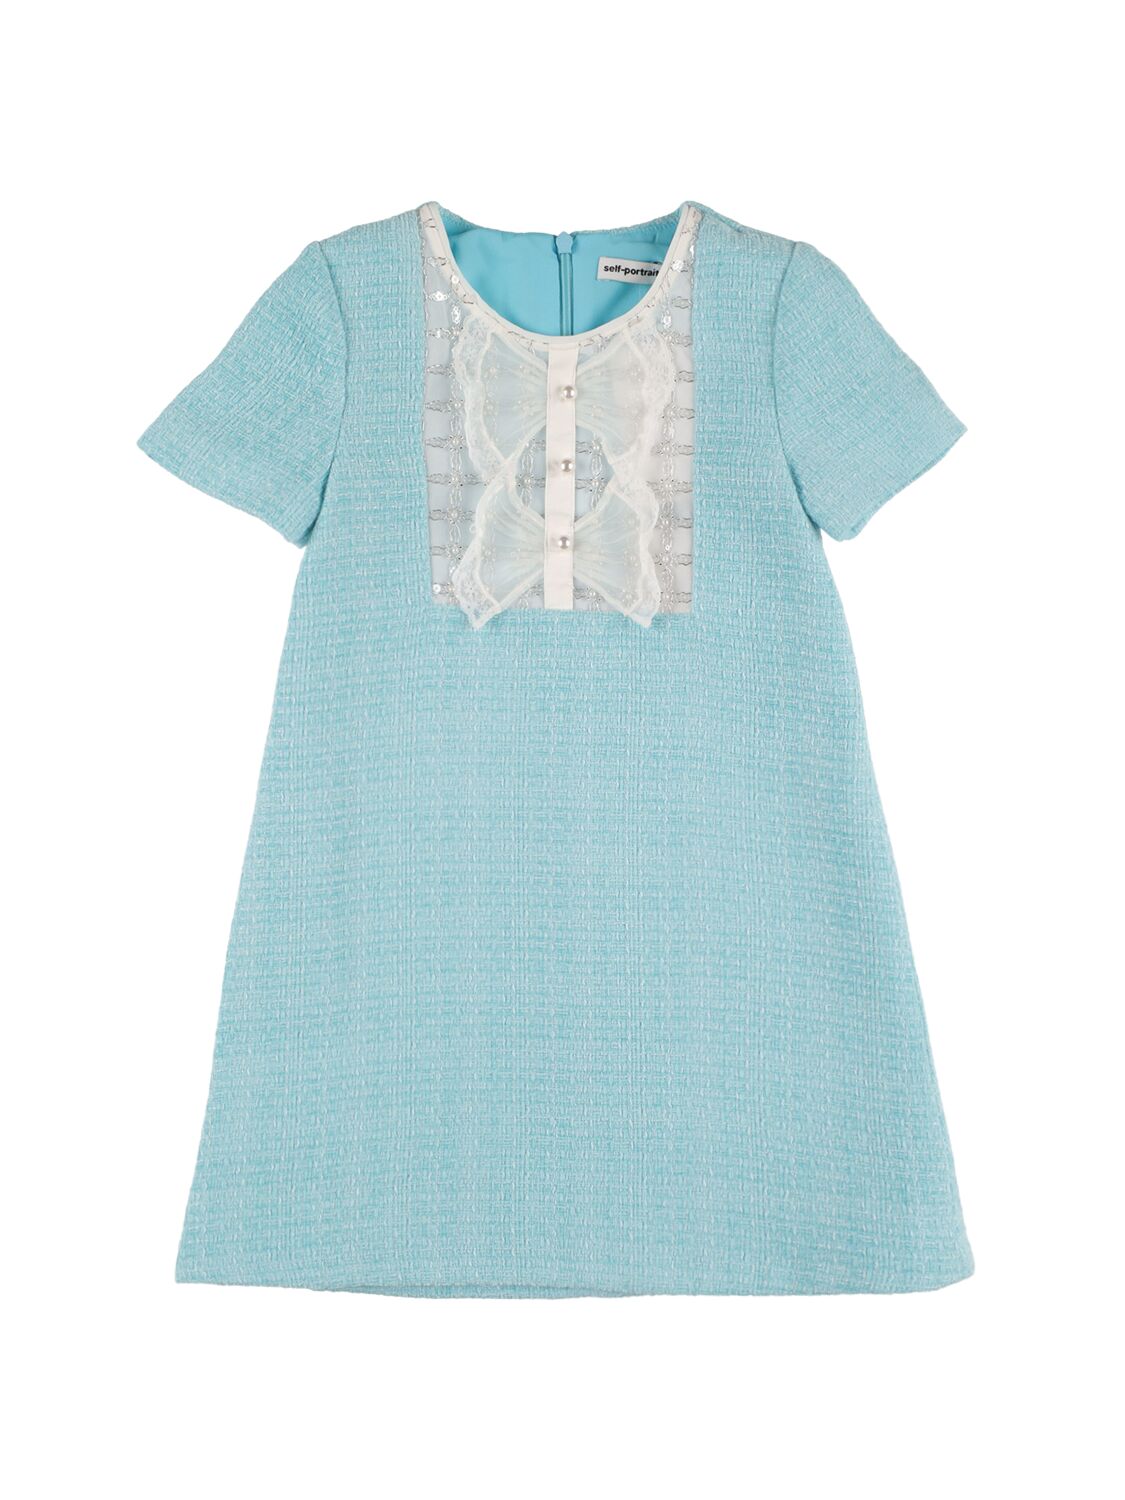 Image of Cotton Knit Shirt Dress W/ Sequins